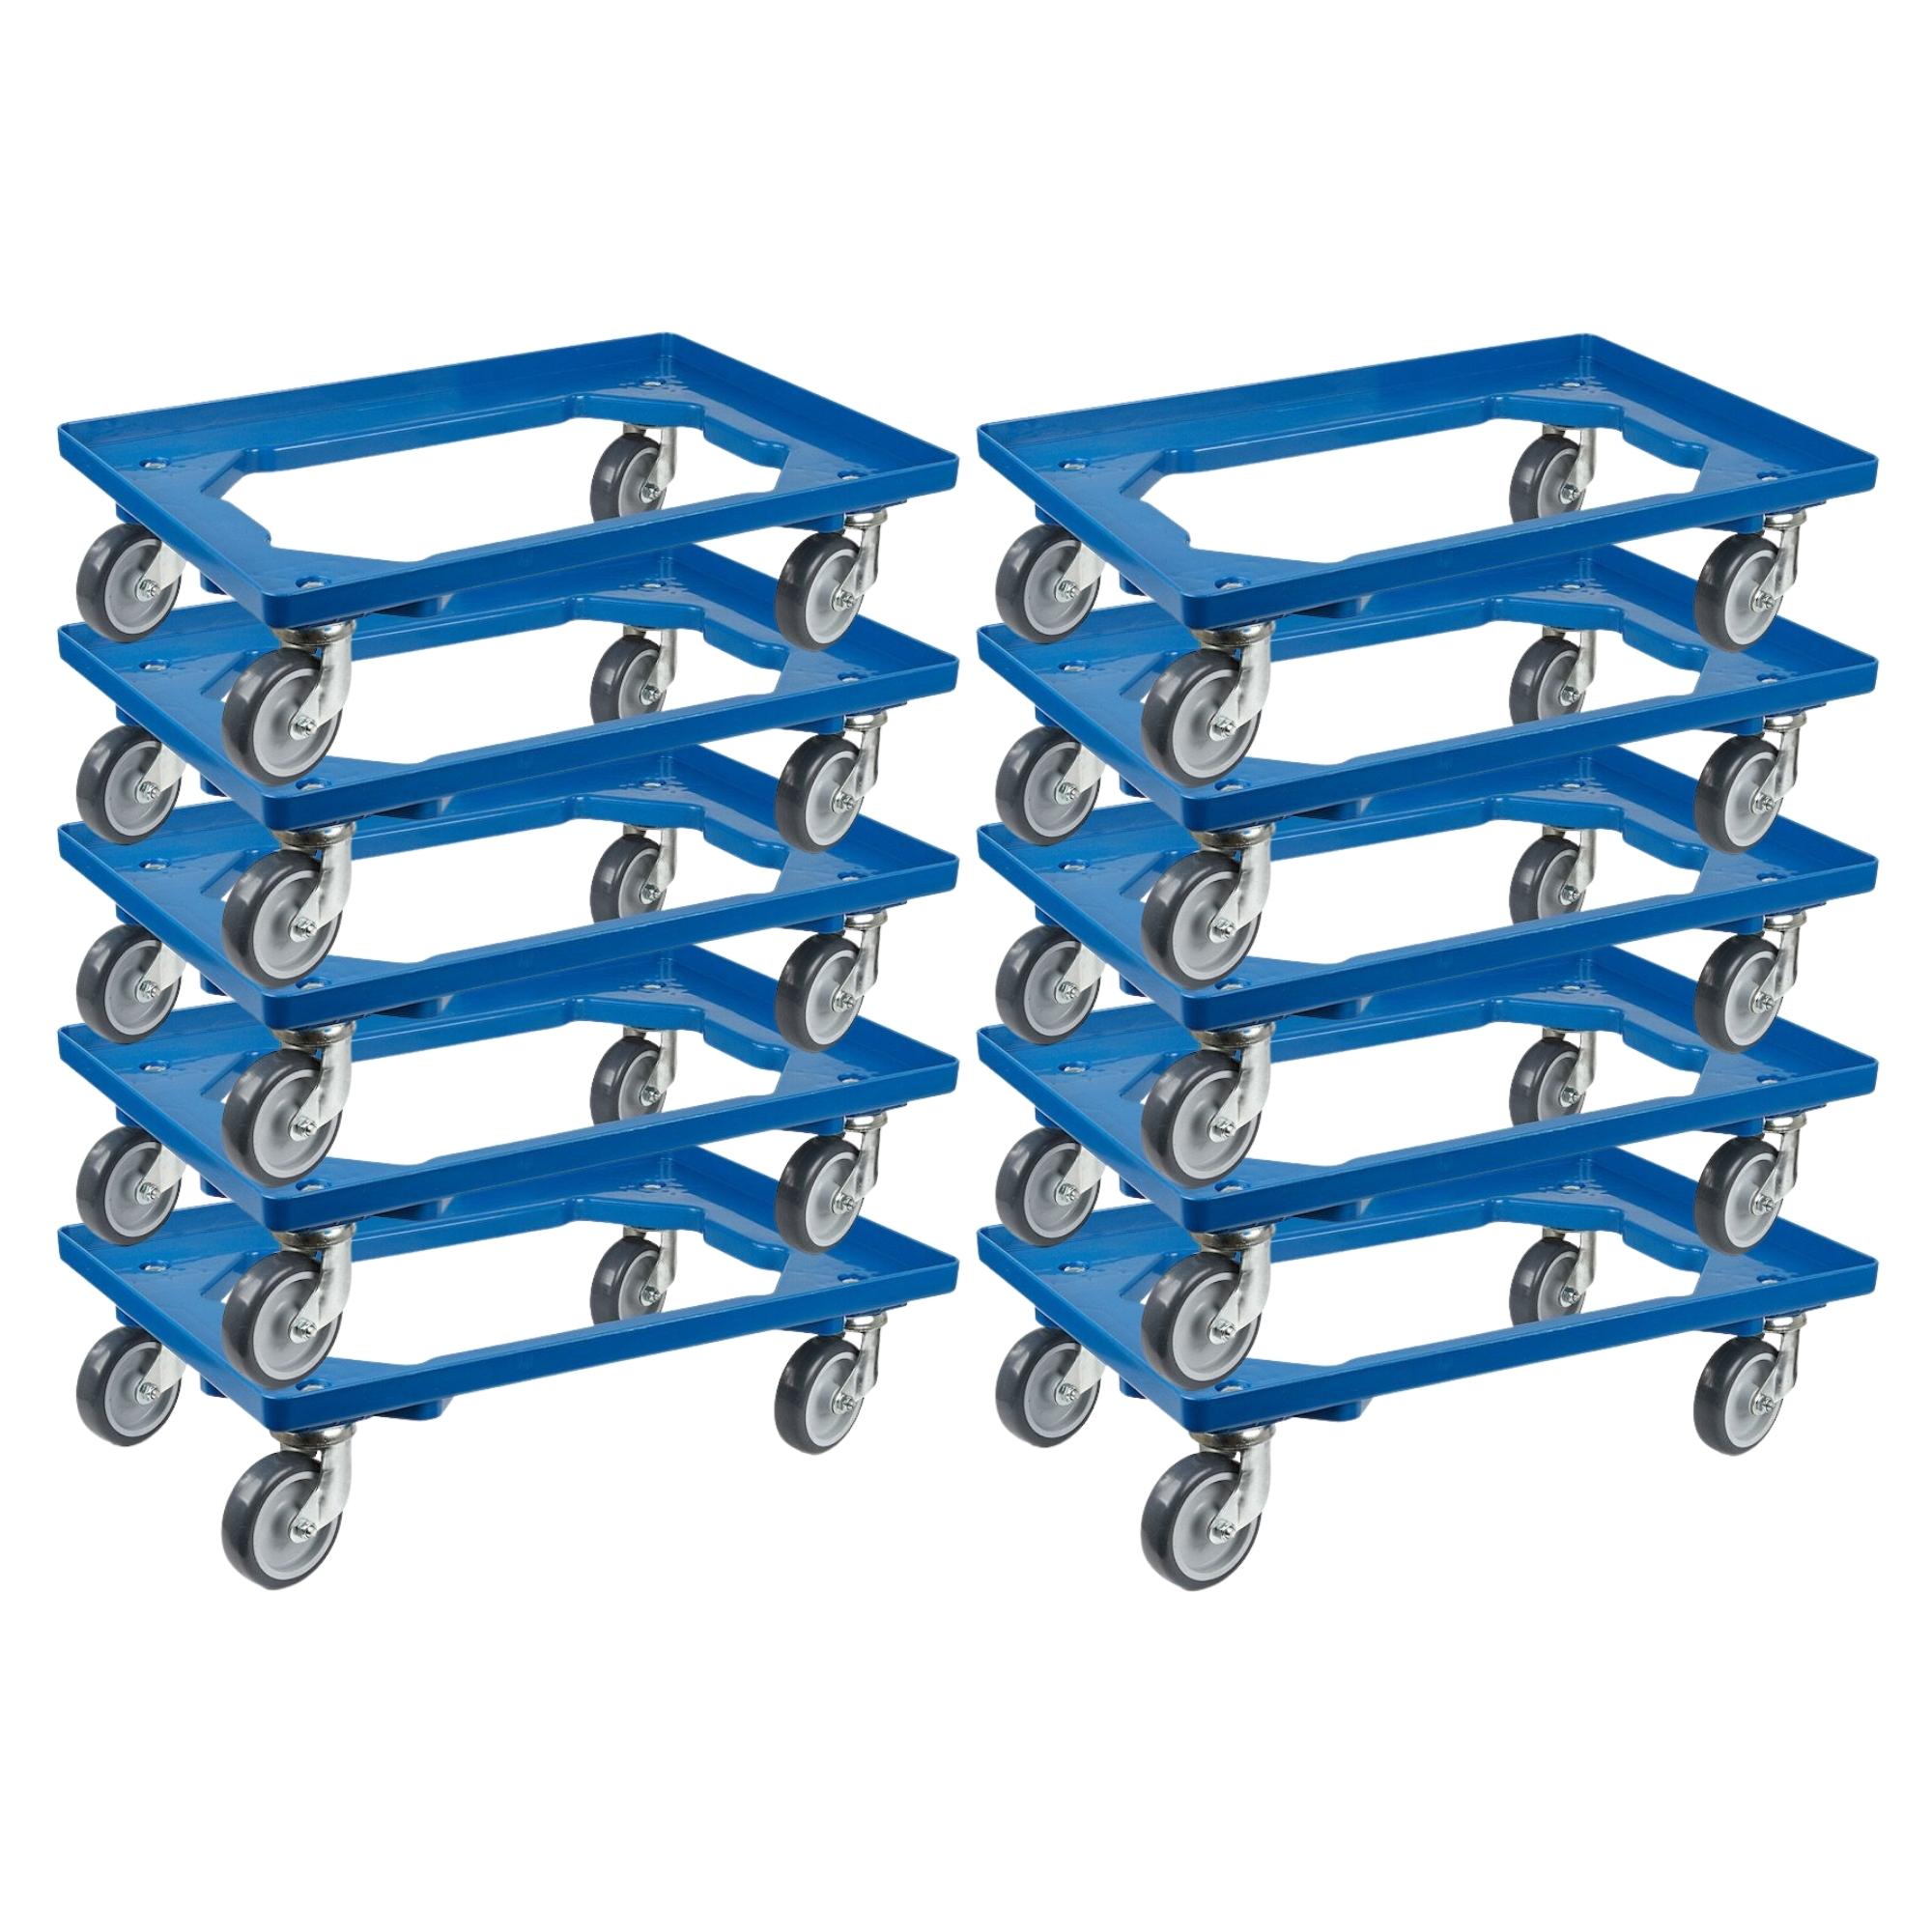 SparSet 10x Transportroller für Euroboxen 60x40cm mit Gummiräder blau | Offenes Deck | 2 Lenkrollen & 2 Bremsrollen | Traglast 300kg | Kistenroller Logistikroller Rollwagen Profi-Fahrgestell